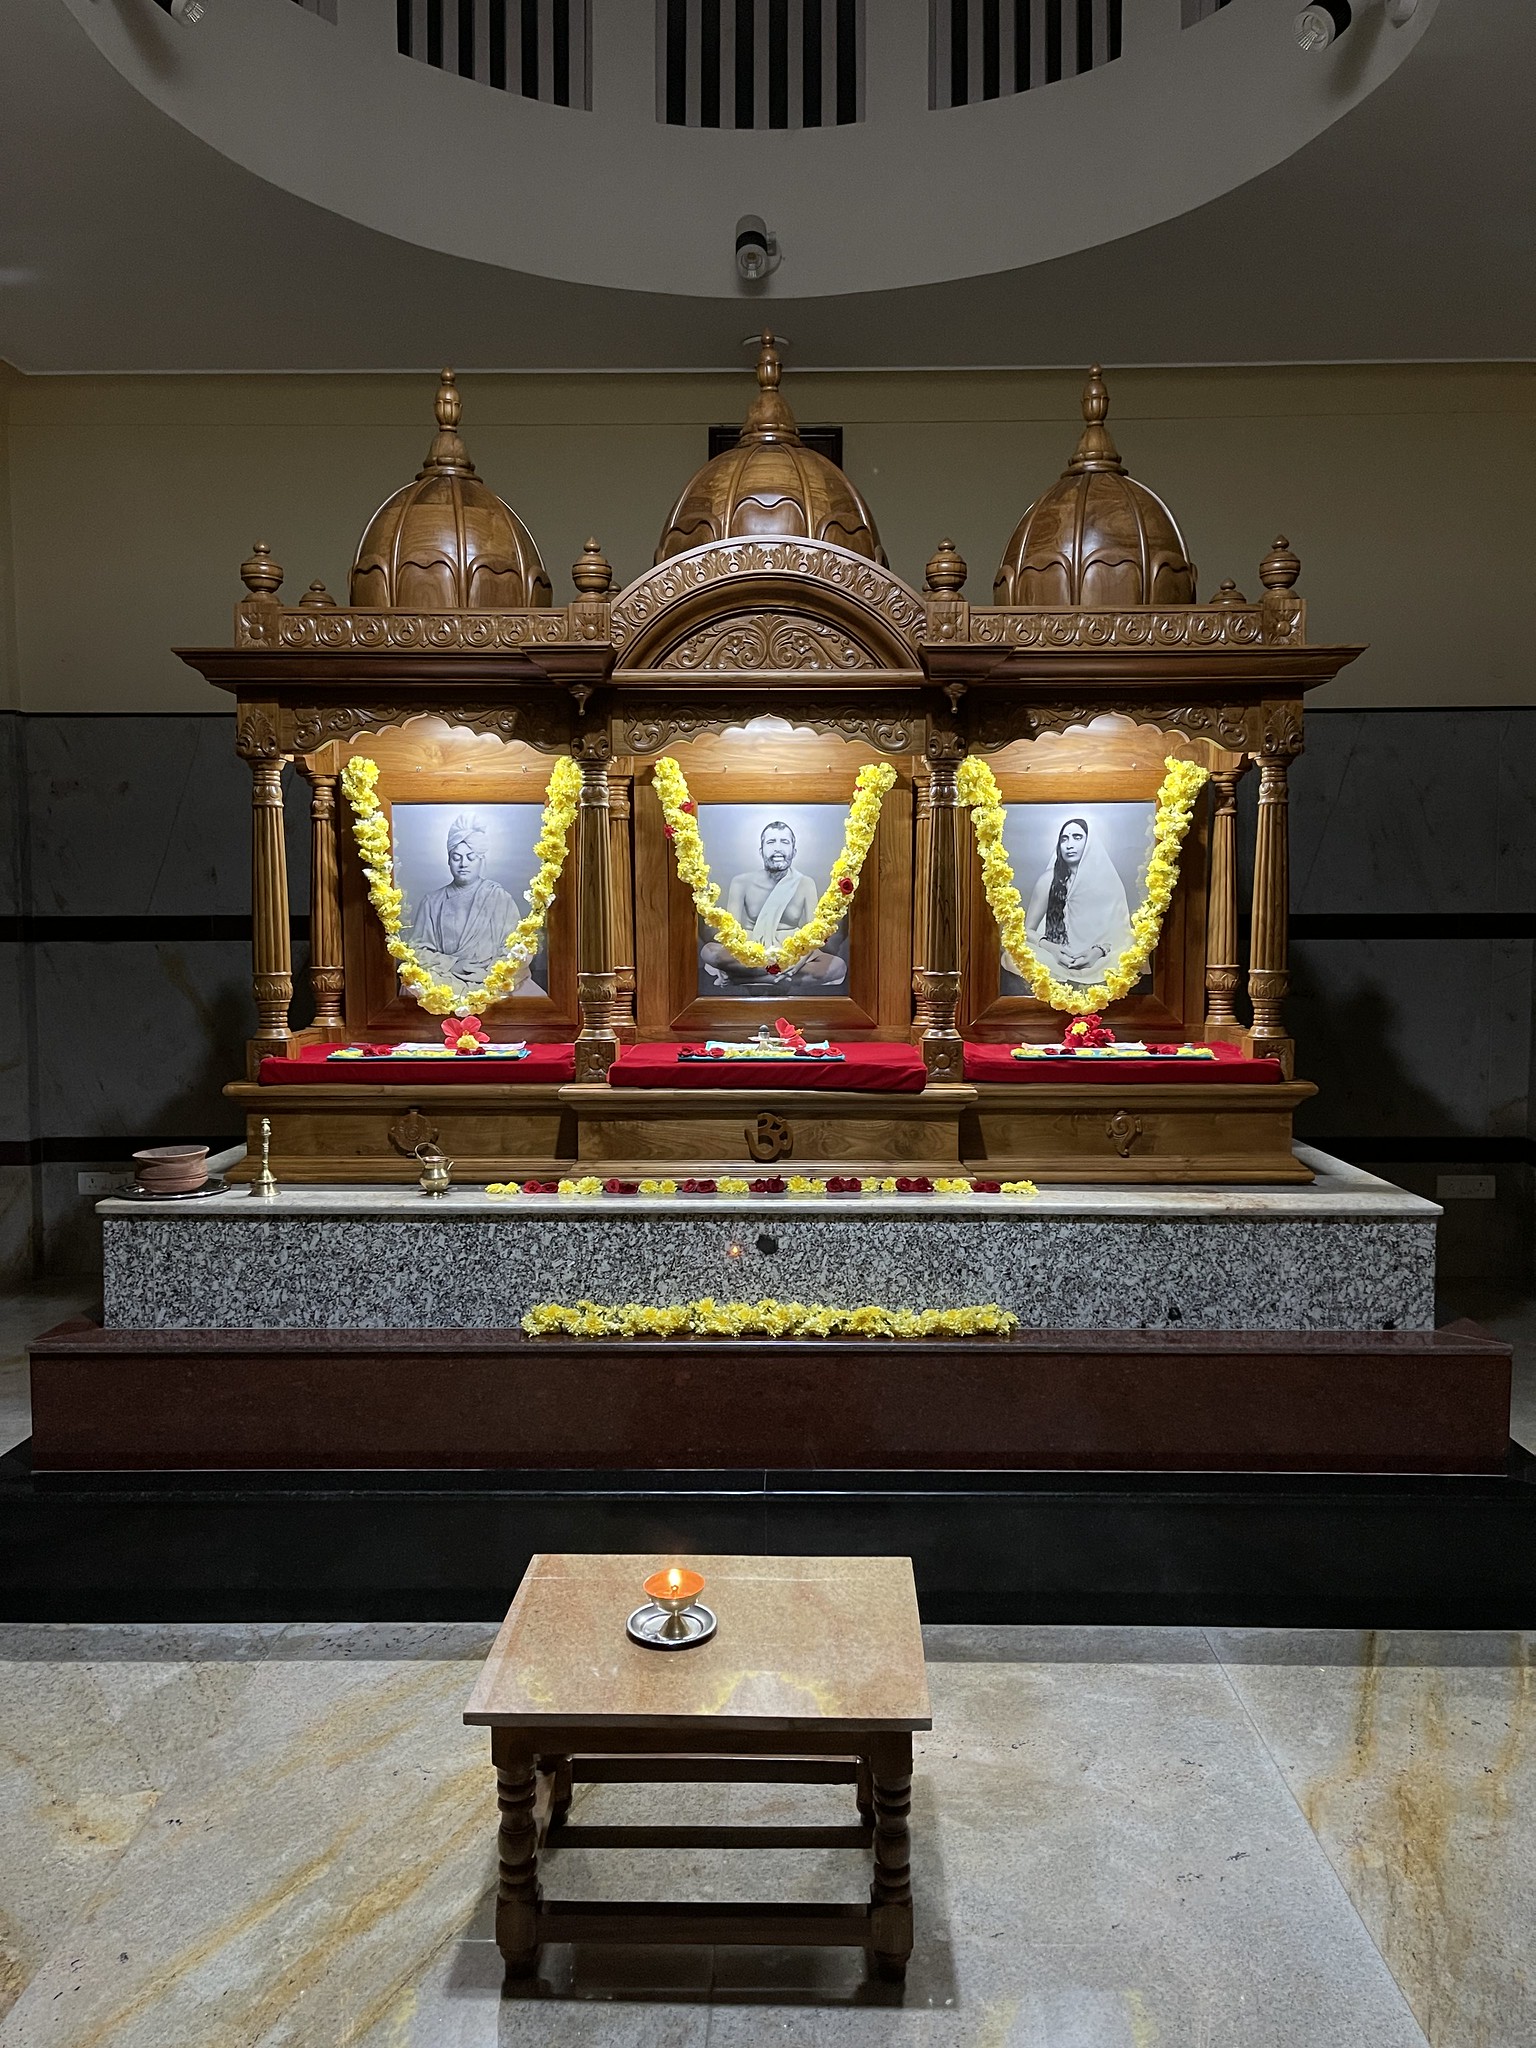 Spiritual Retreat (Antaryogam) at Ramakrishna Math, Yelagiri, 26-28 January 2023